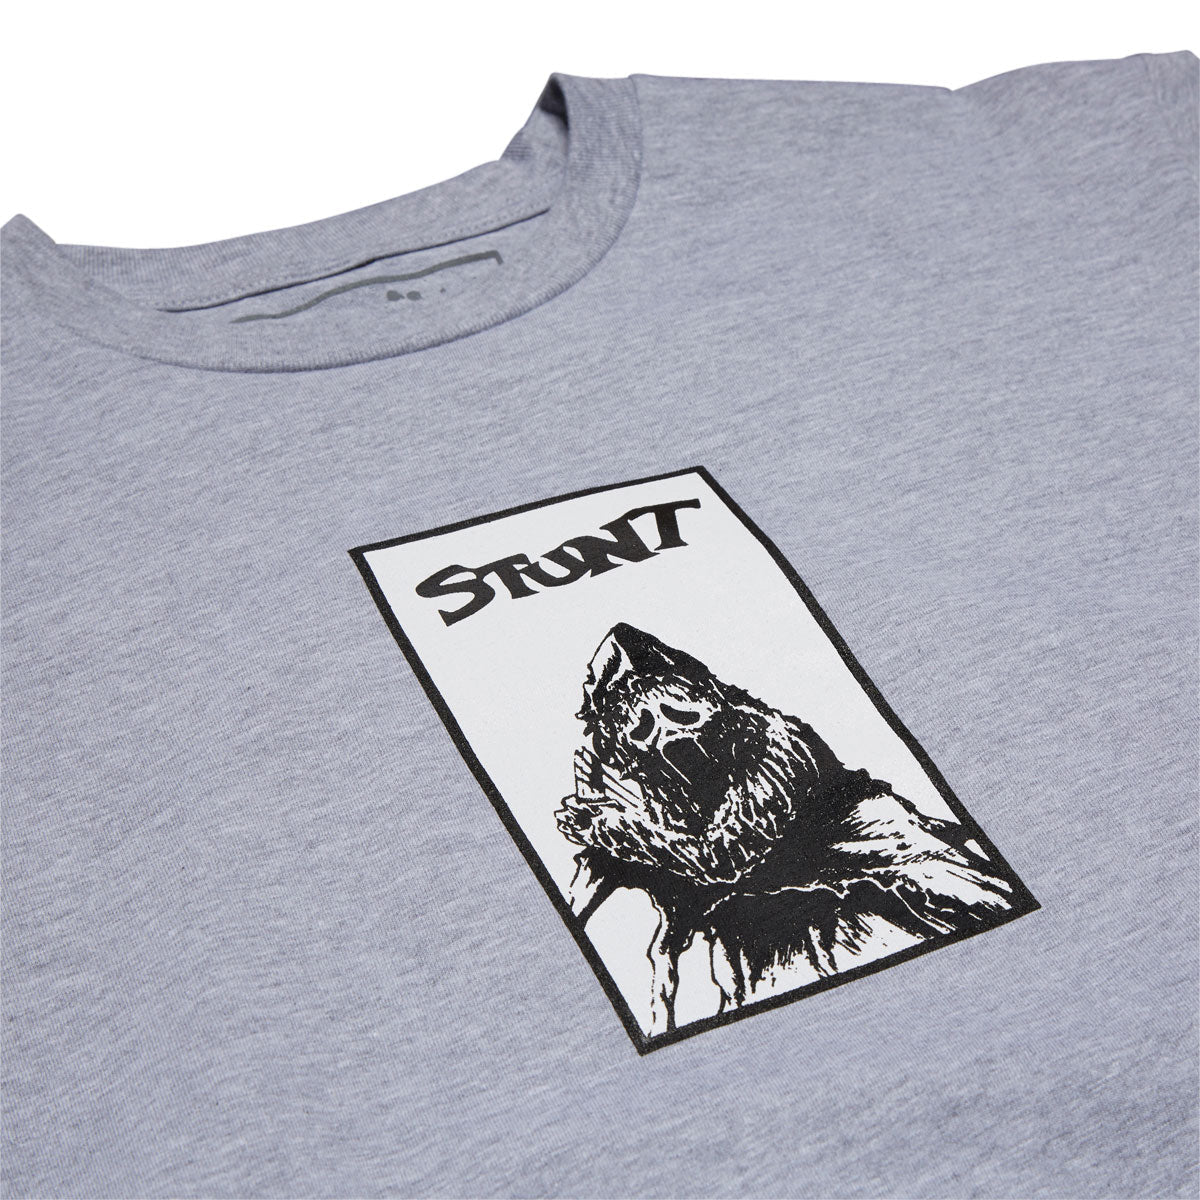 Stunt Ripper T-Shirt - Grey image 2